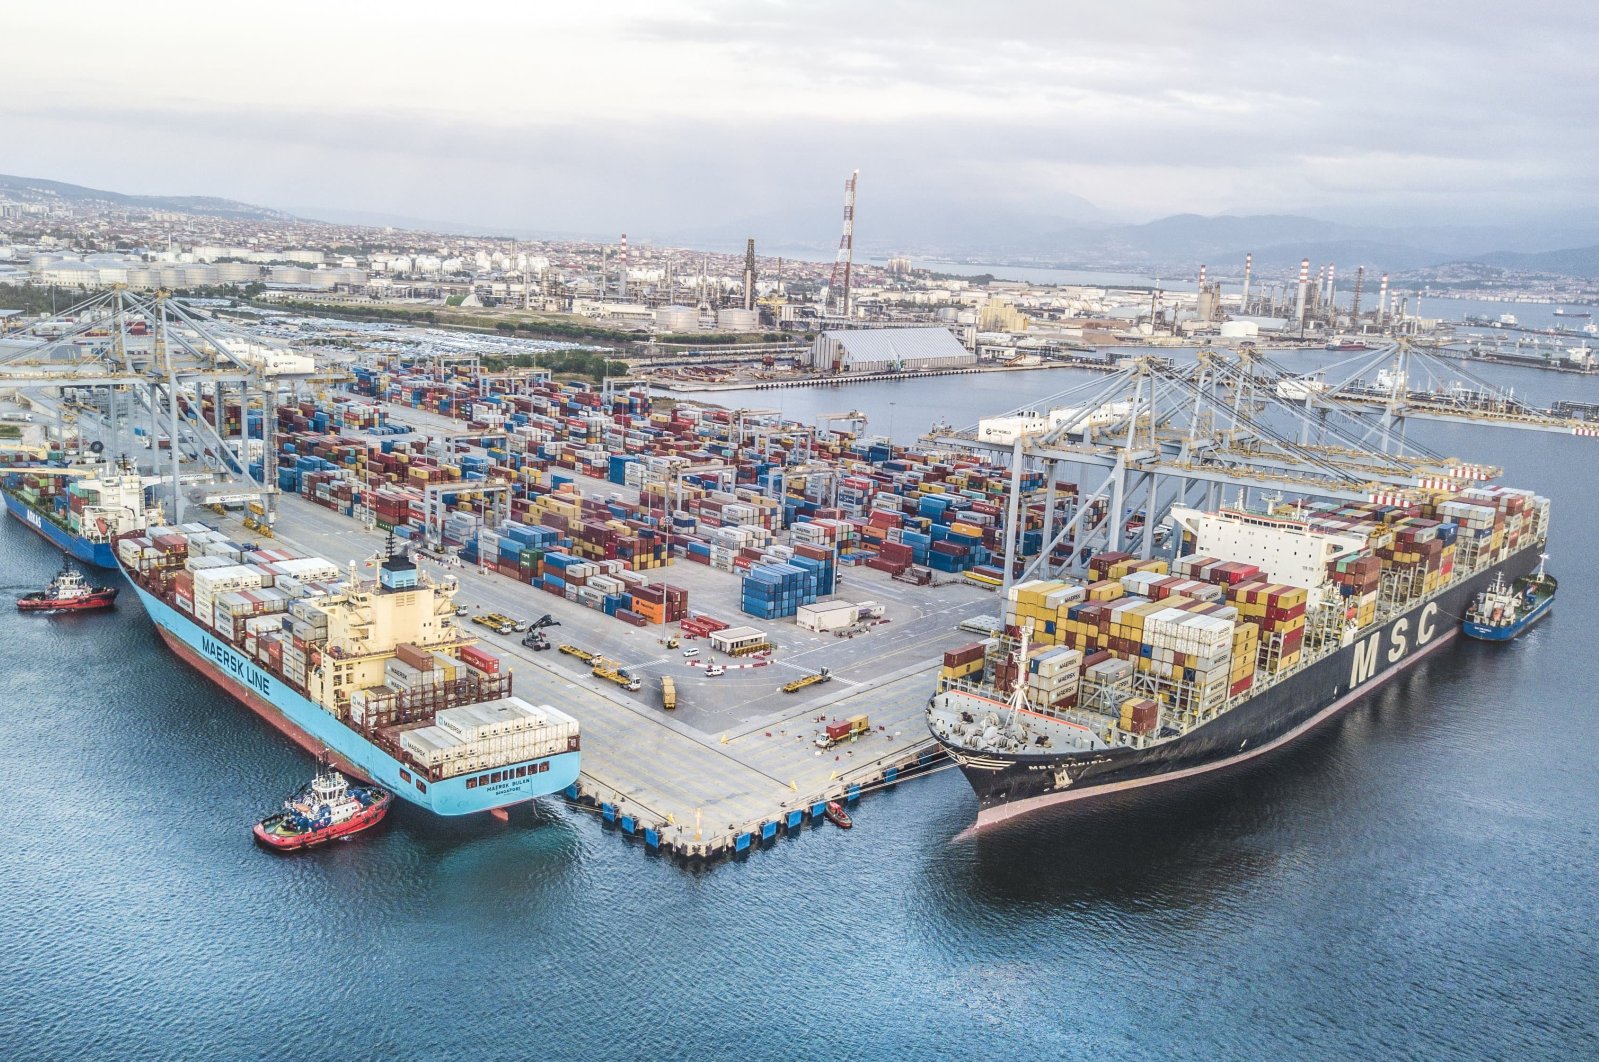 Containers are seen at the DP World Yarımca port, northwestern Kocaeli province, Turkey, Feb. 8, 2019. (Courtesy of DP World Yarımca)